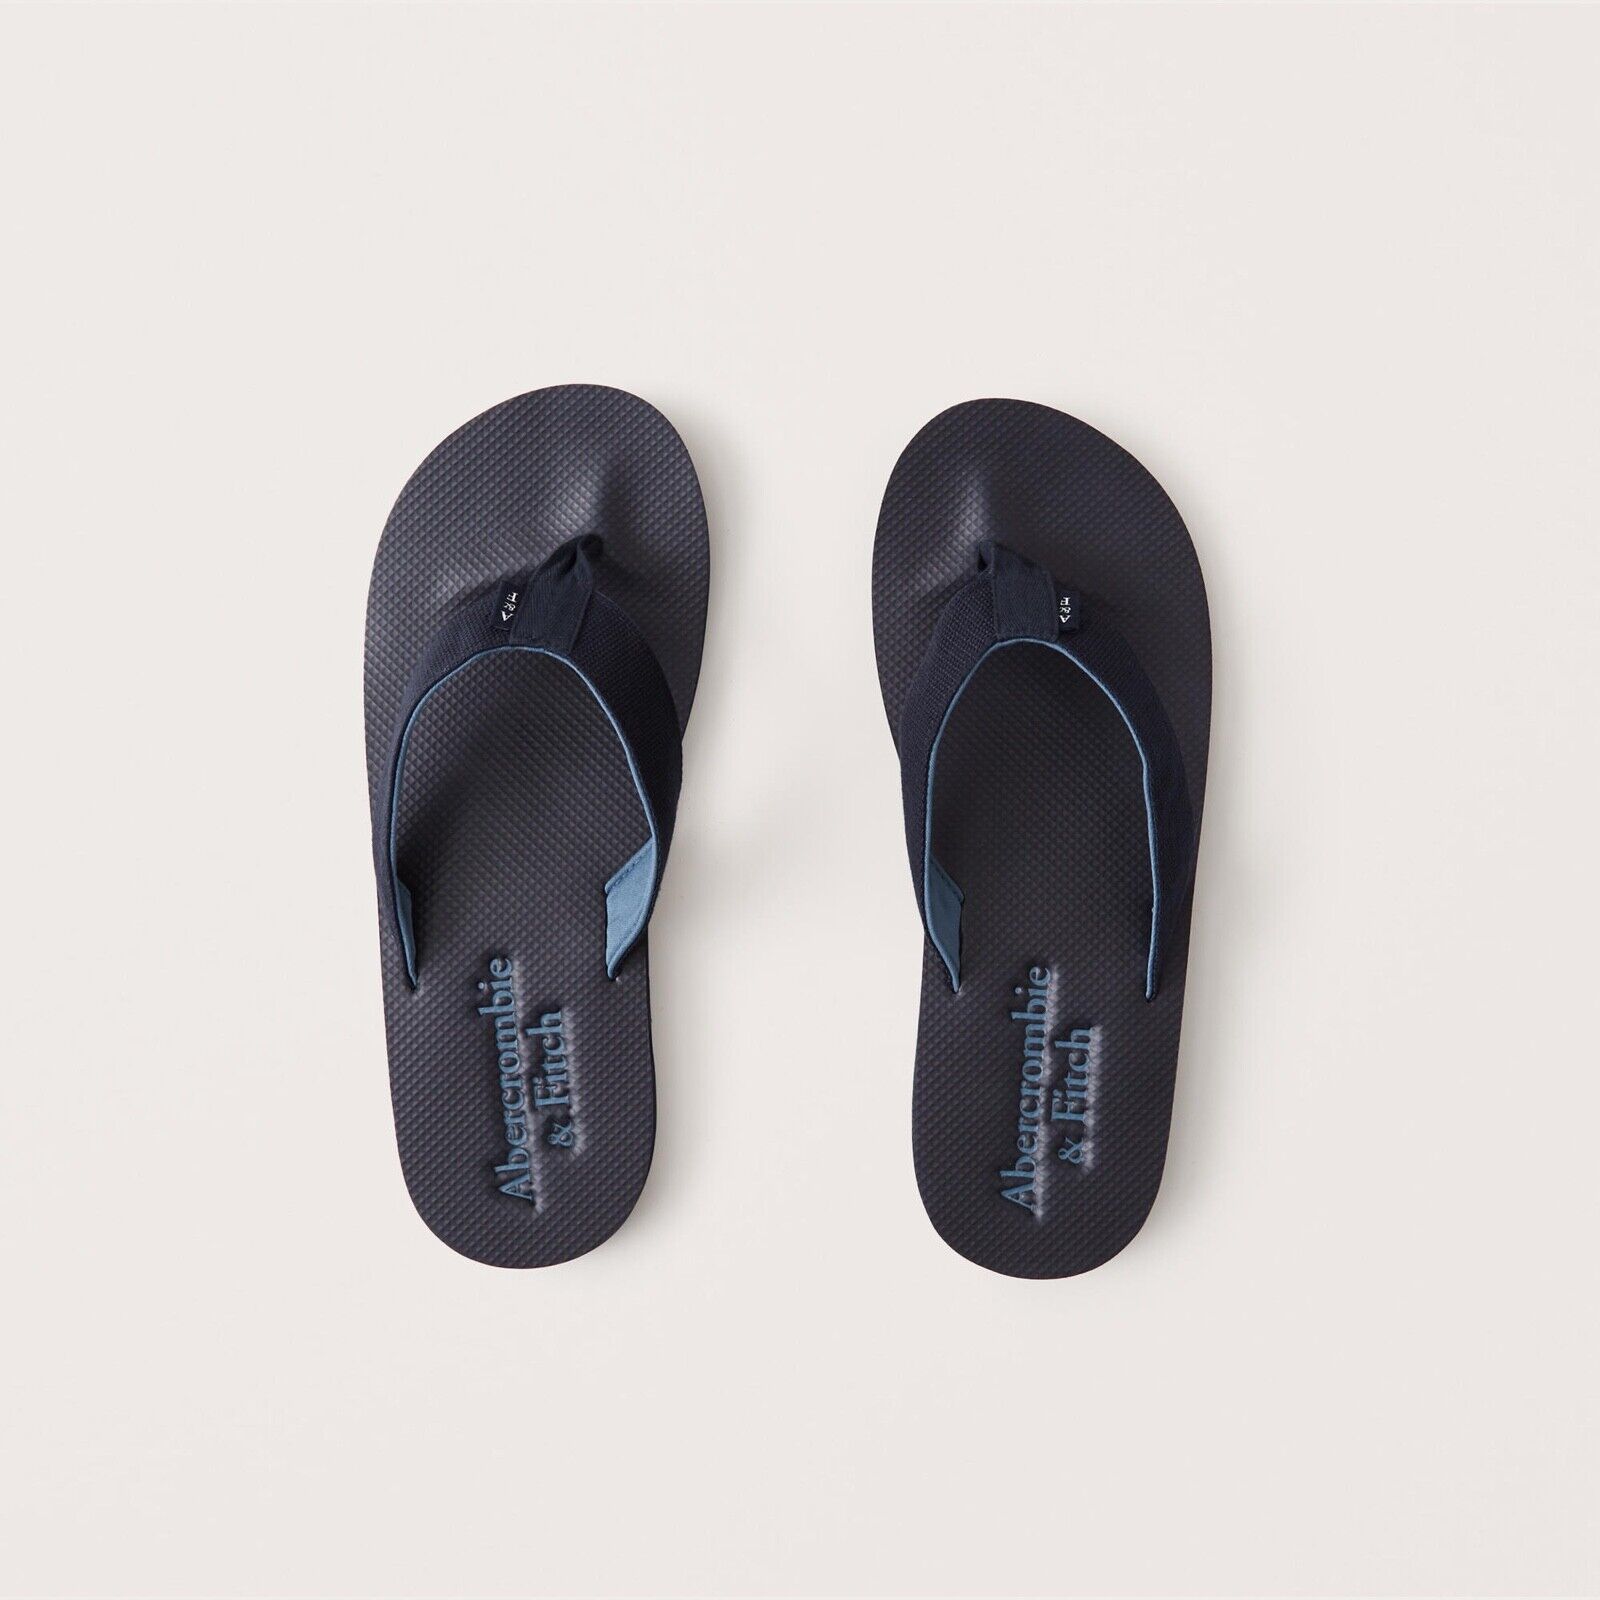 Abercrombie & Fitch Men Rubber Flip Flops Sandal - Size S eBay